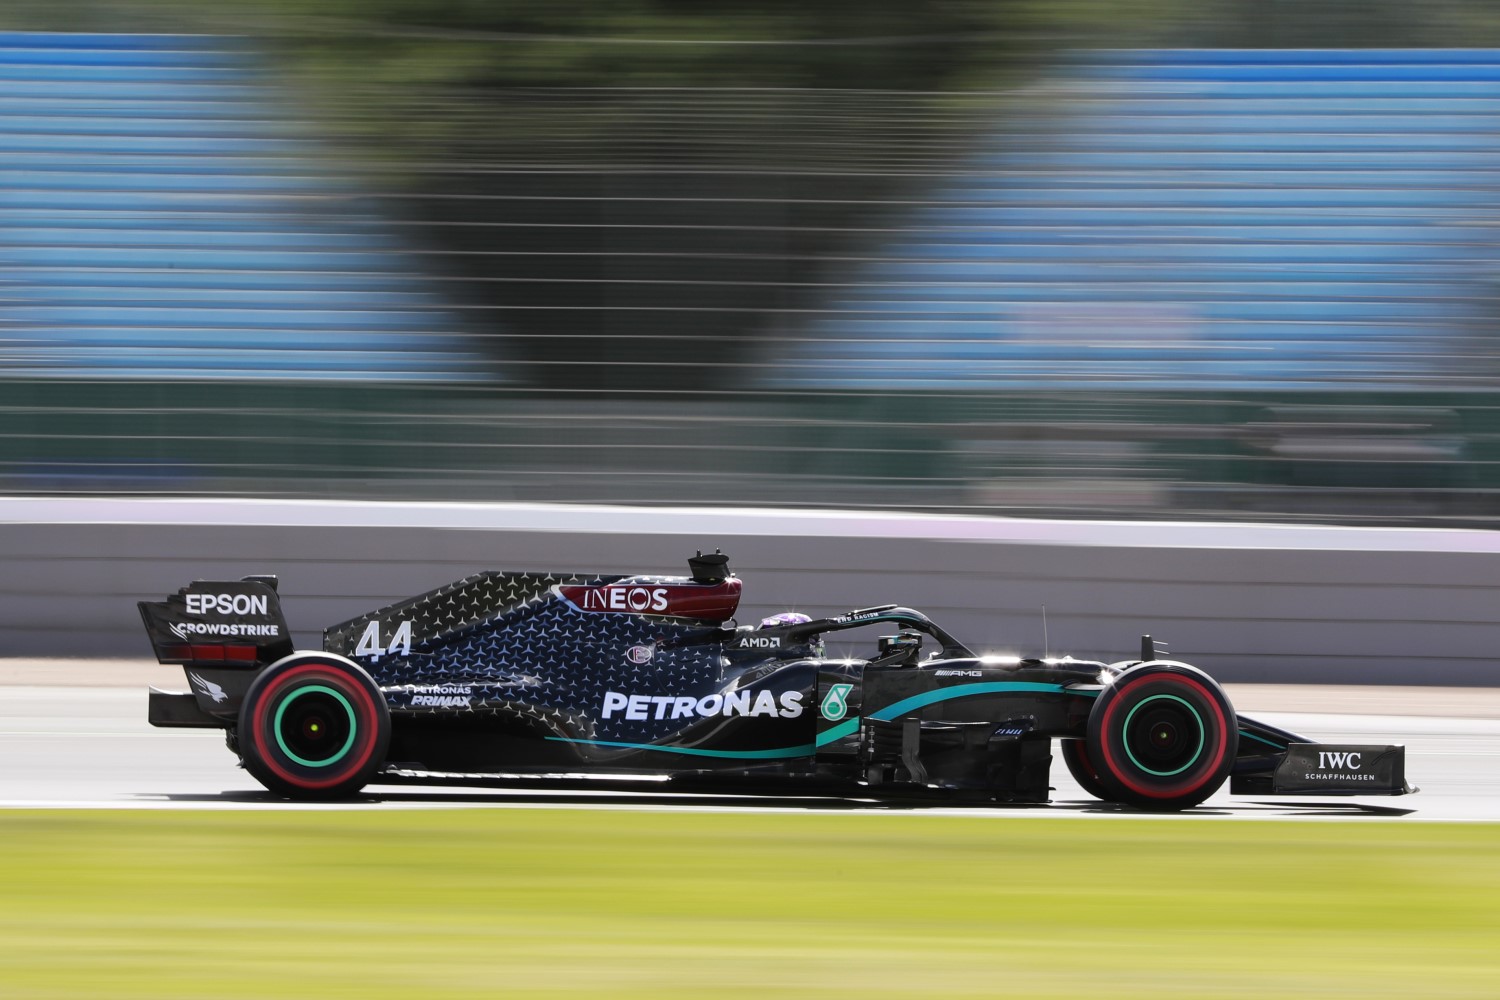 Lewis Hamilton in the unbeatable Mercedes